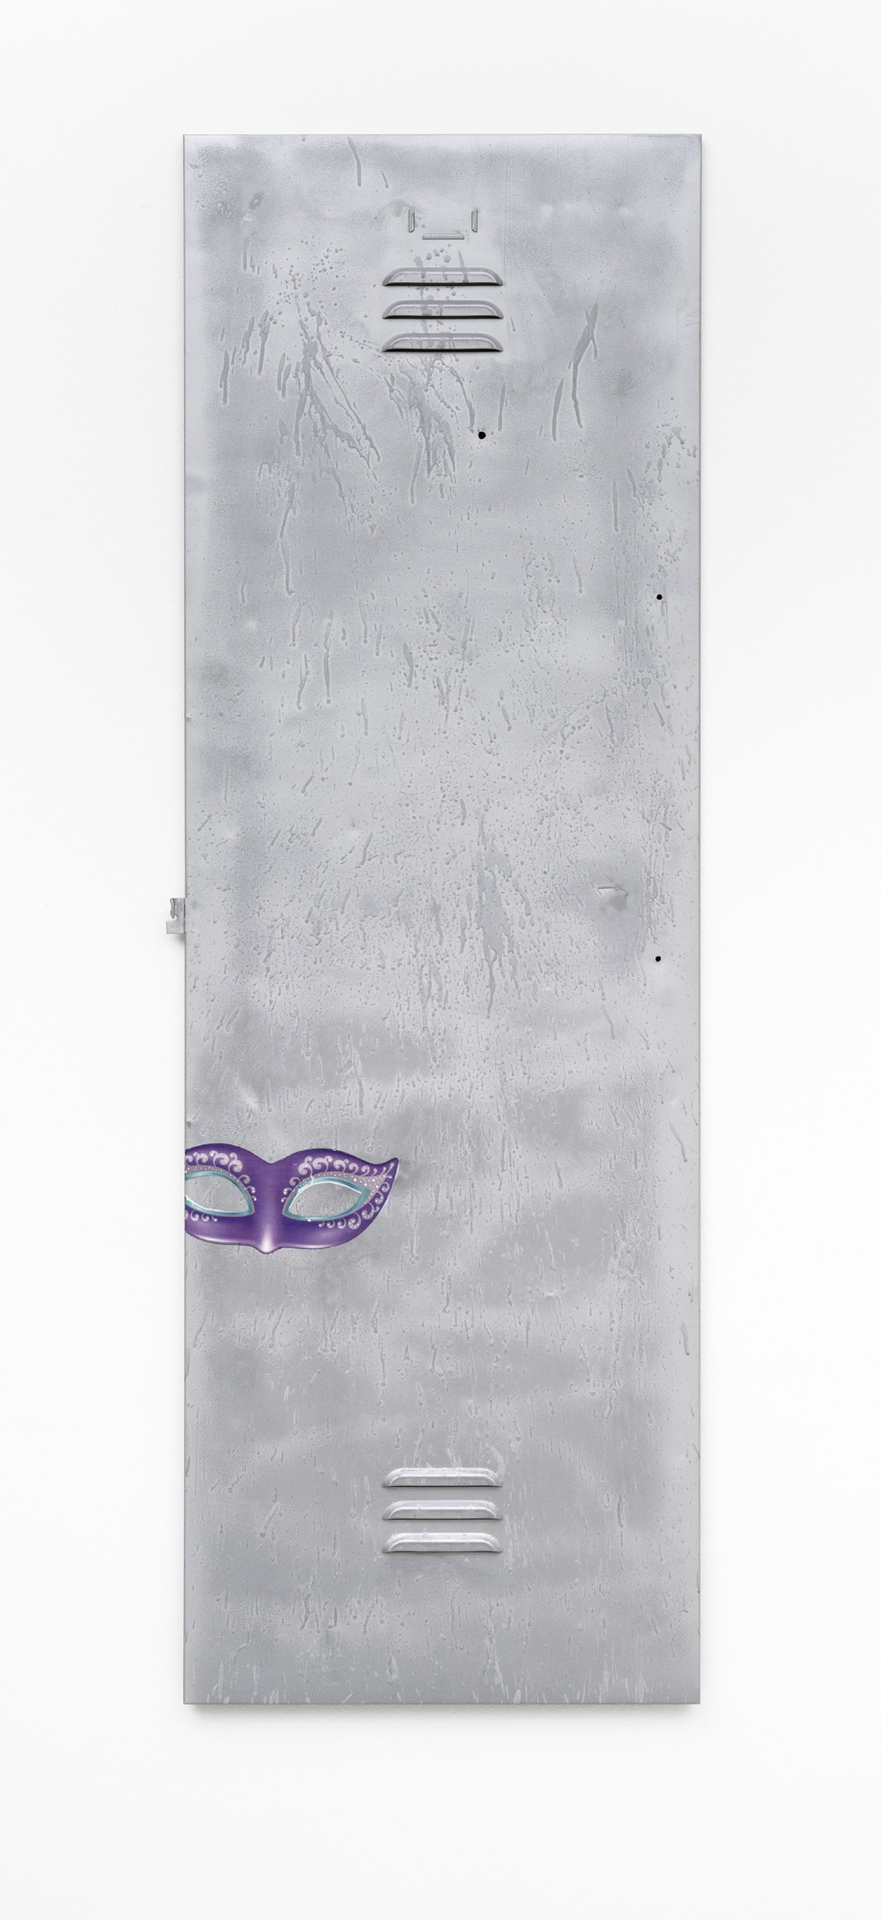 Felix Kultau, Mask Locker, 2020, acrylic and digital print on metal, 168 x 55 cm